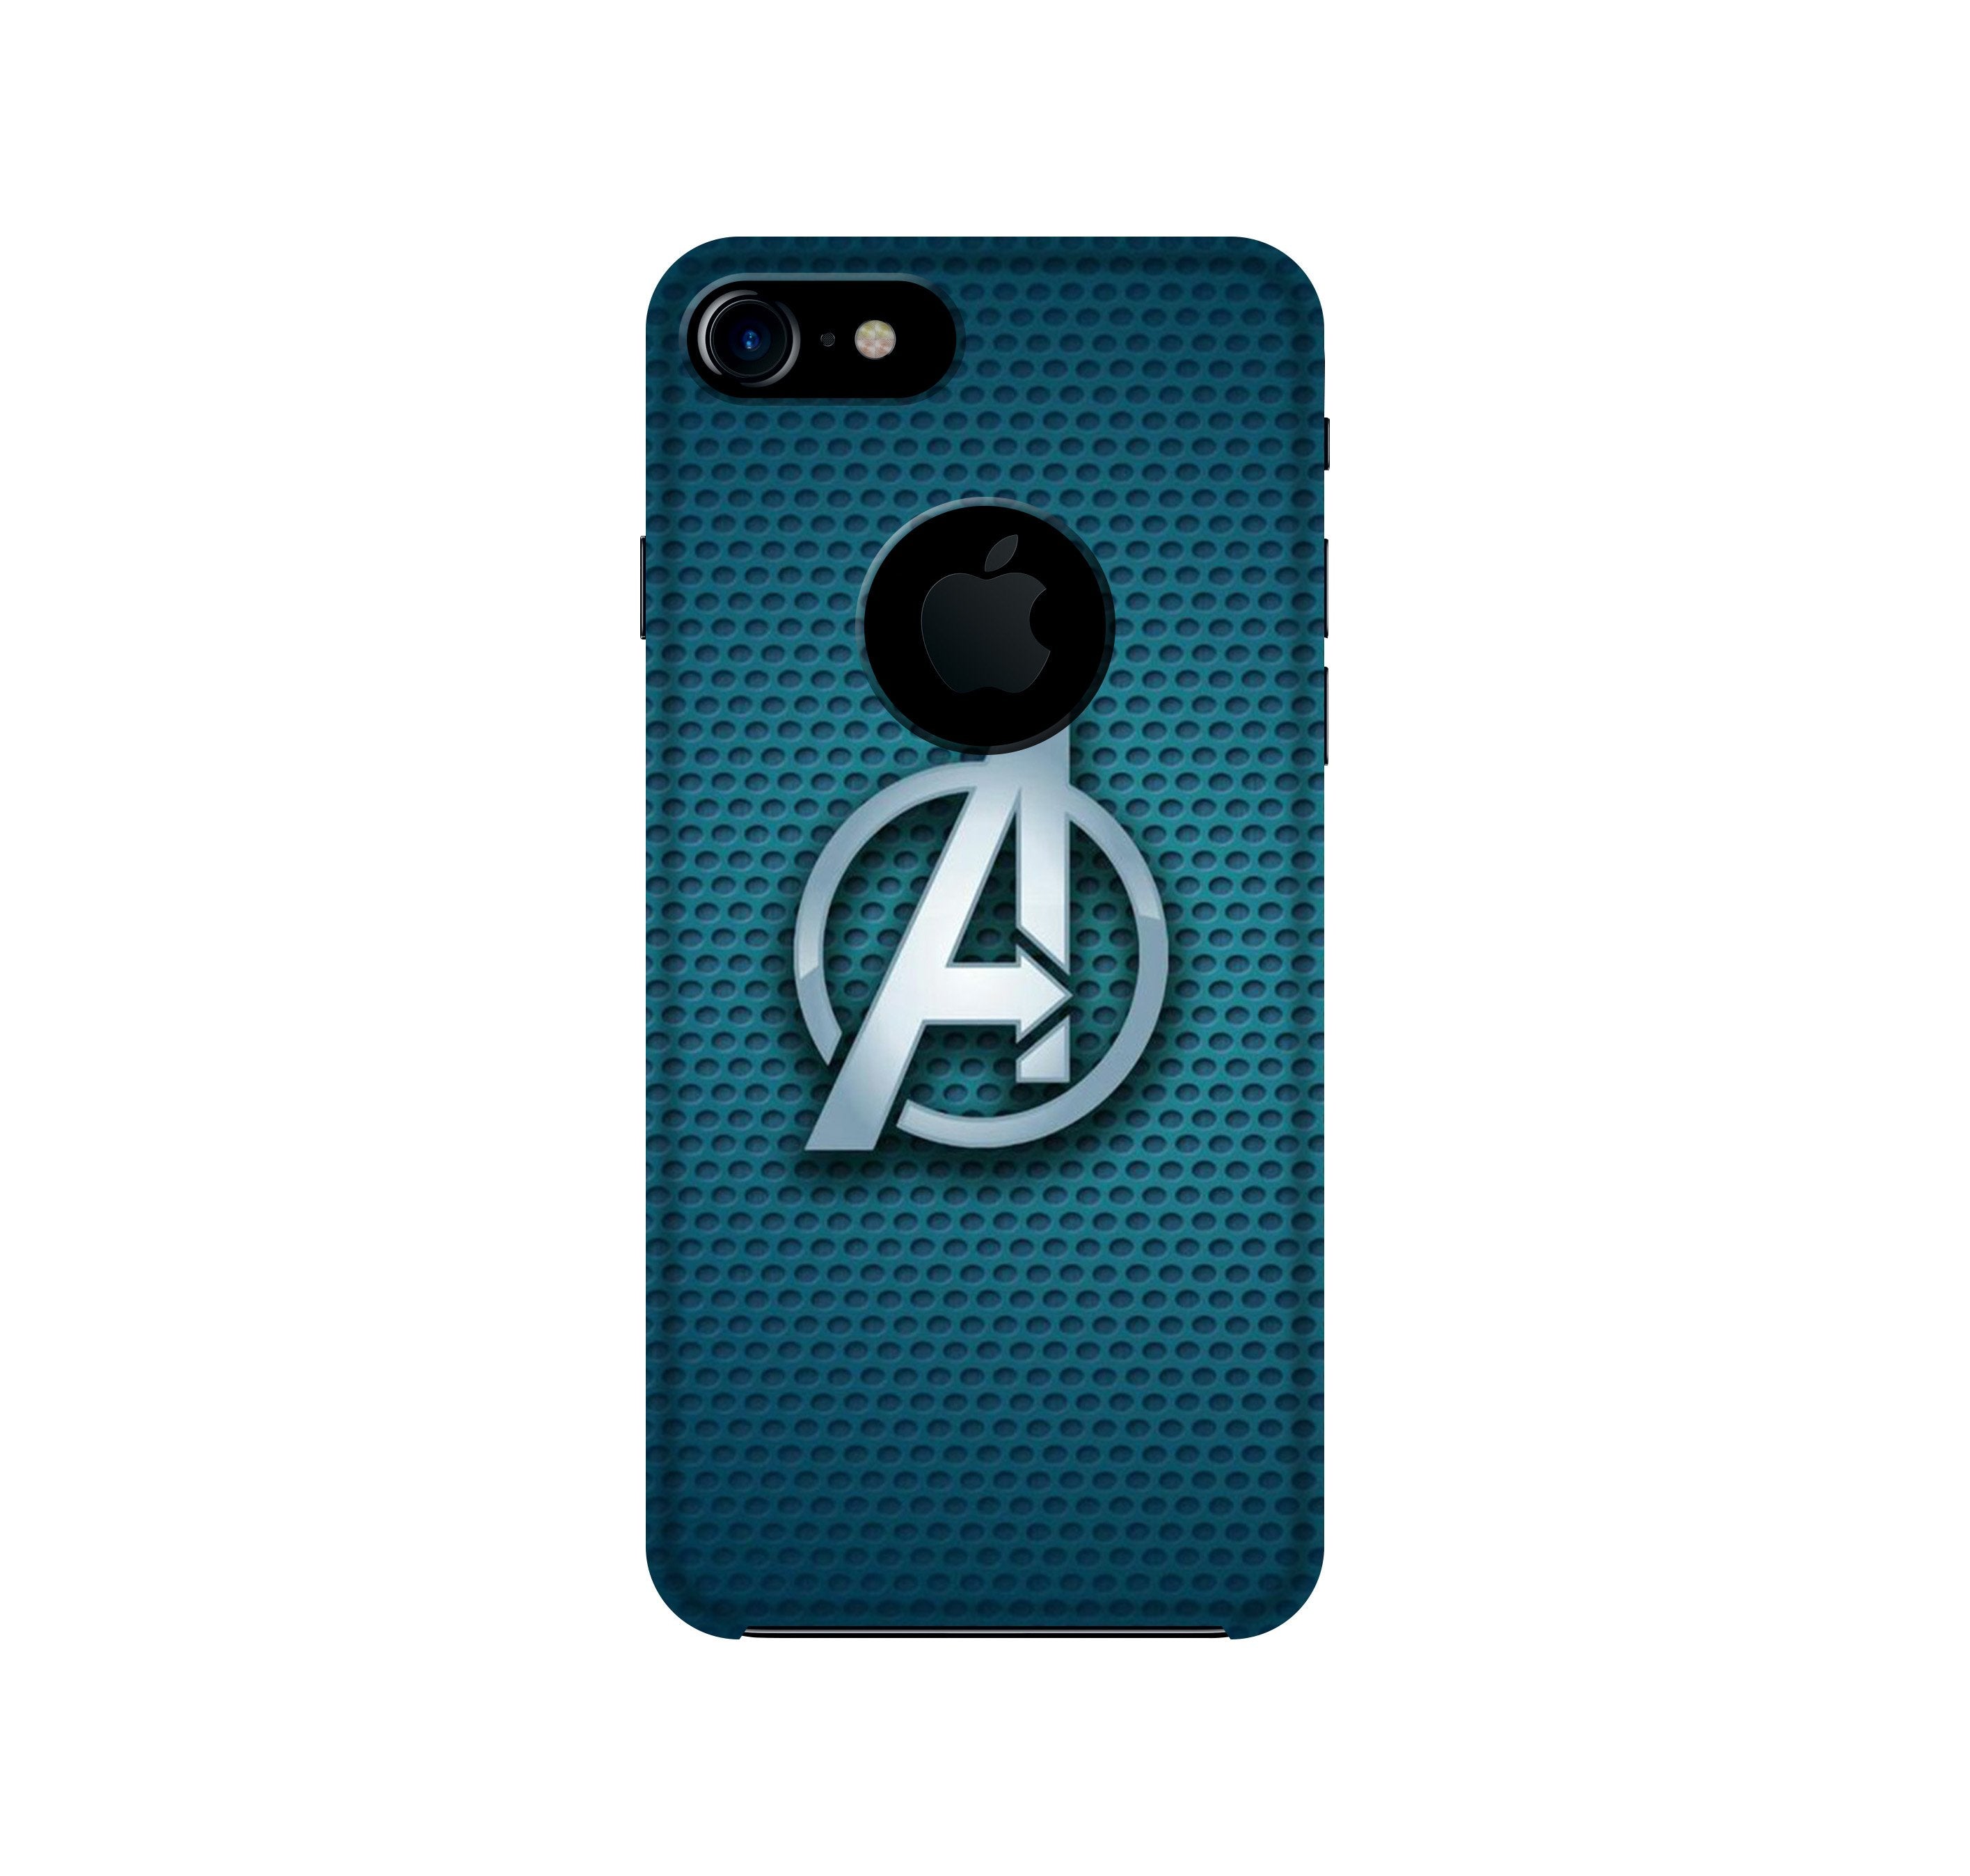 Avengers Case for iPhone 7 logo cut (Design No. 246)